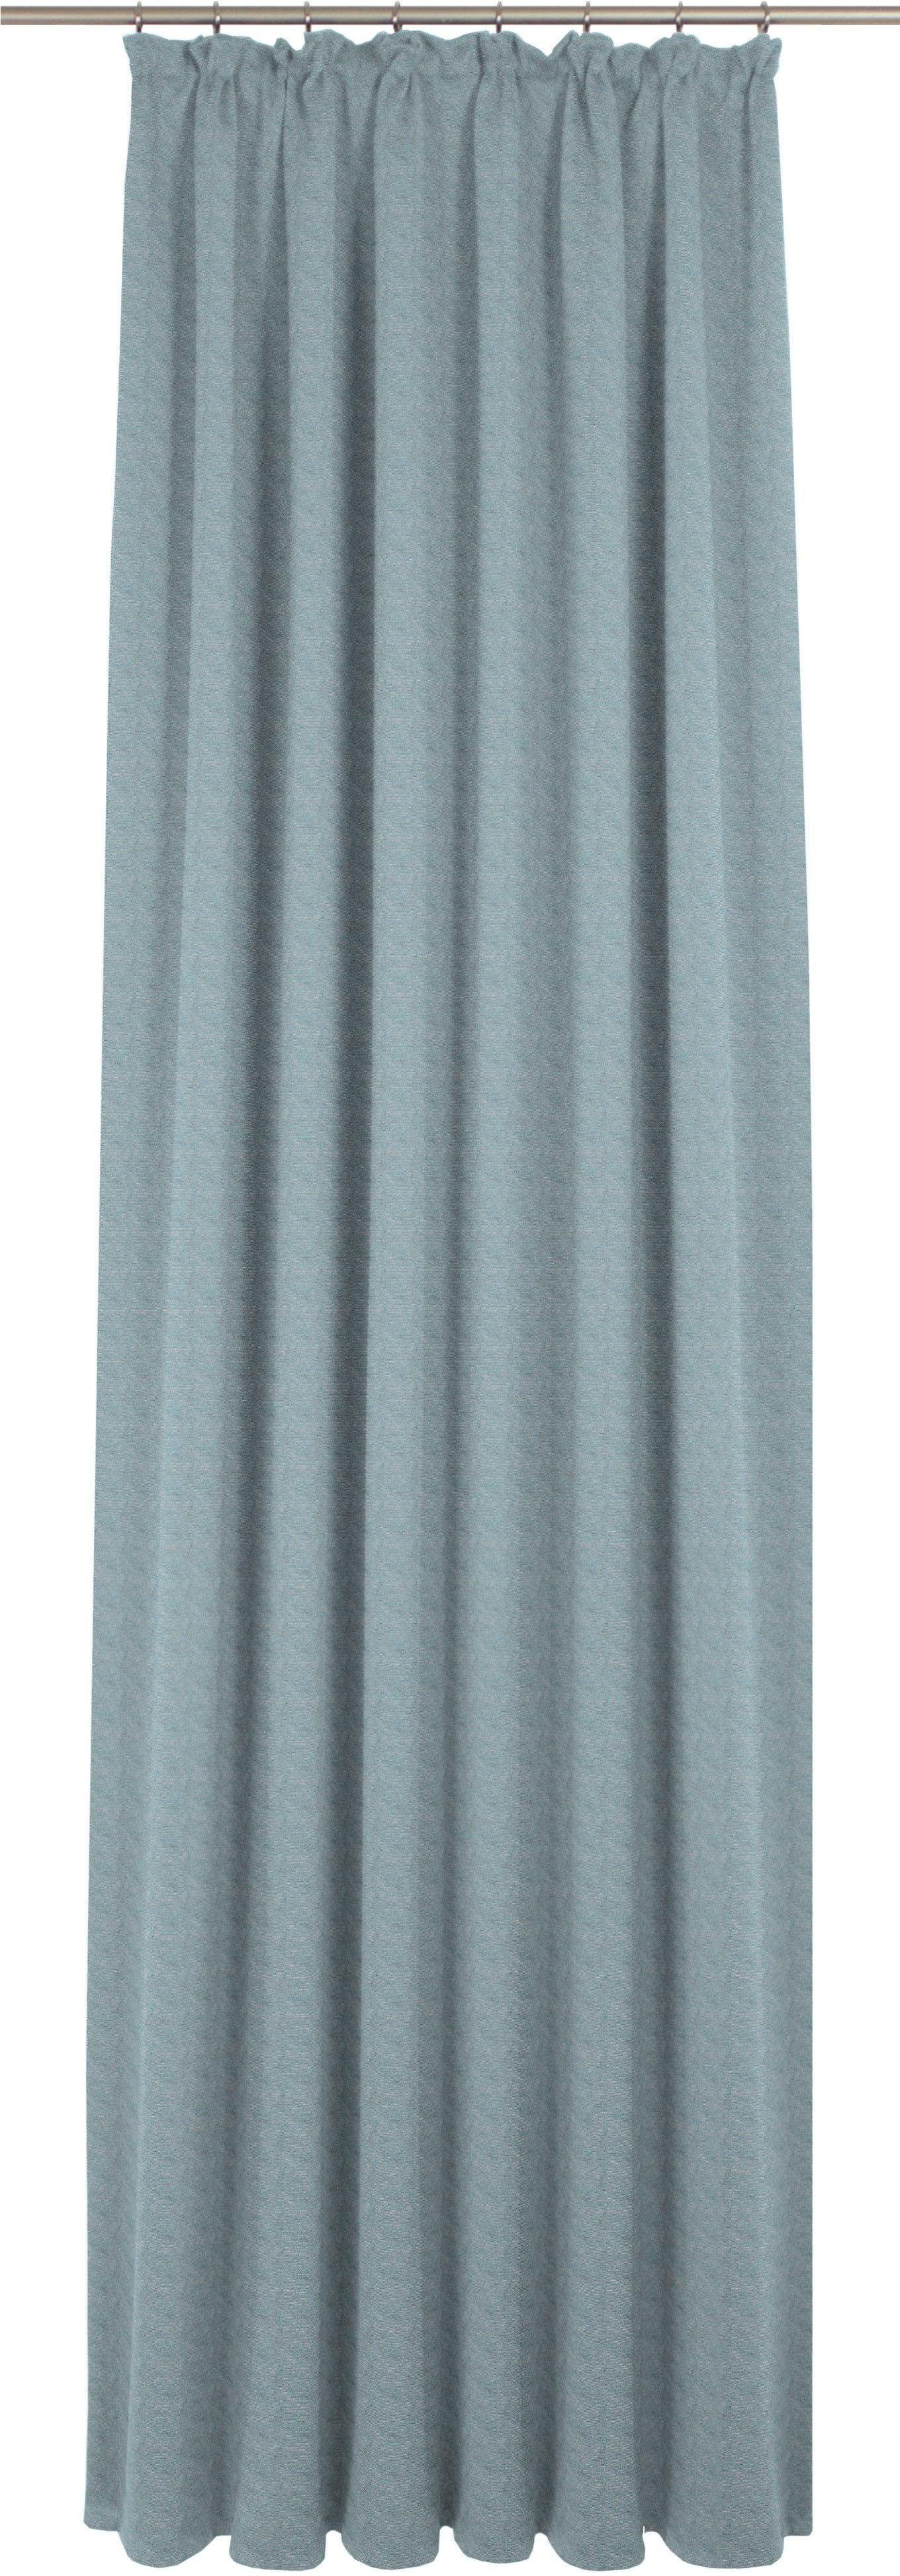 Vorhang Torbole, Wirth, Kräuselband (1 St), blickdicht, Jacquard blau